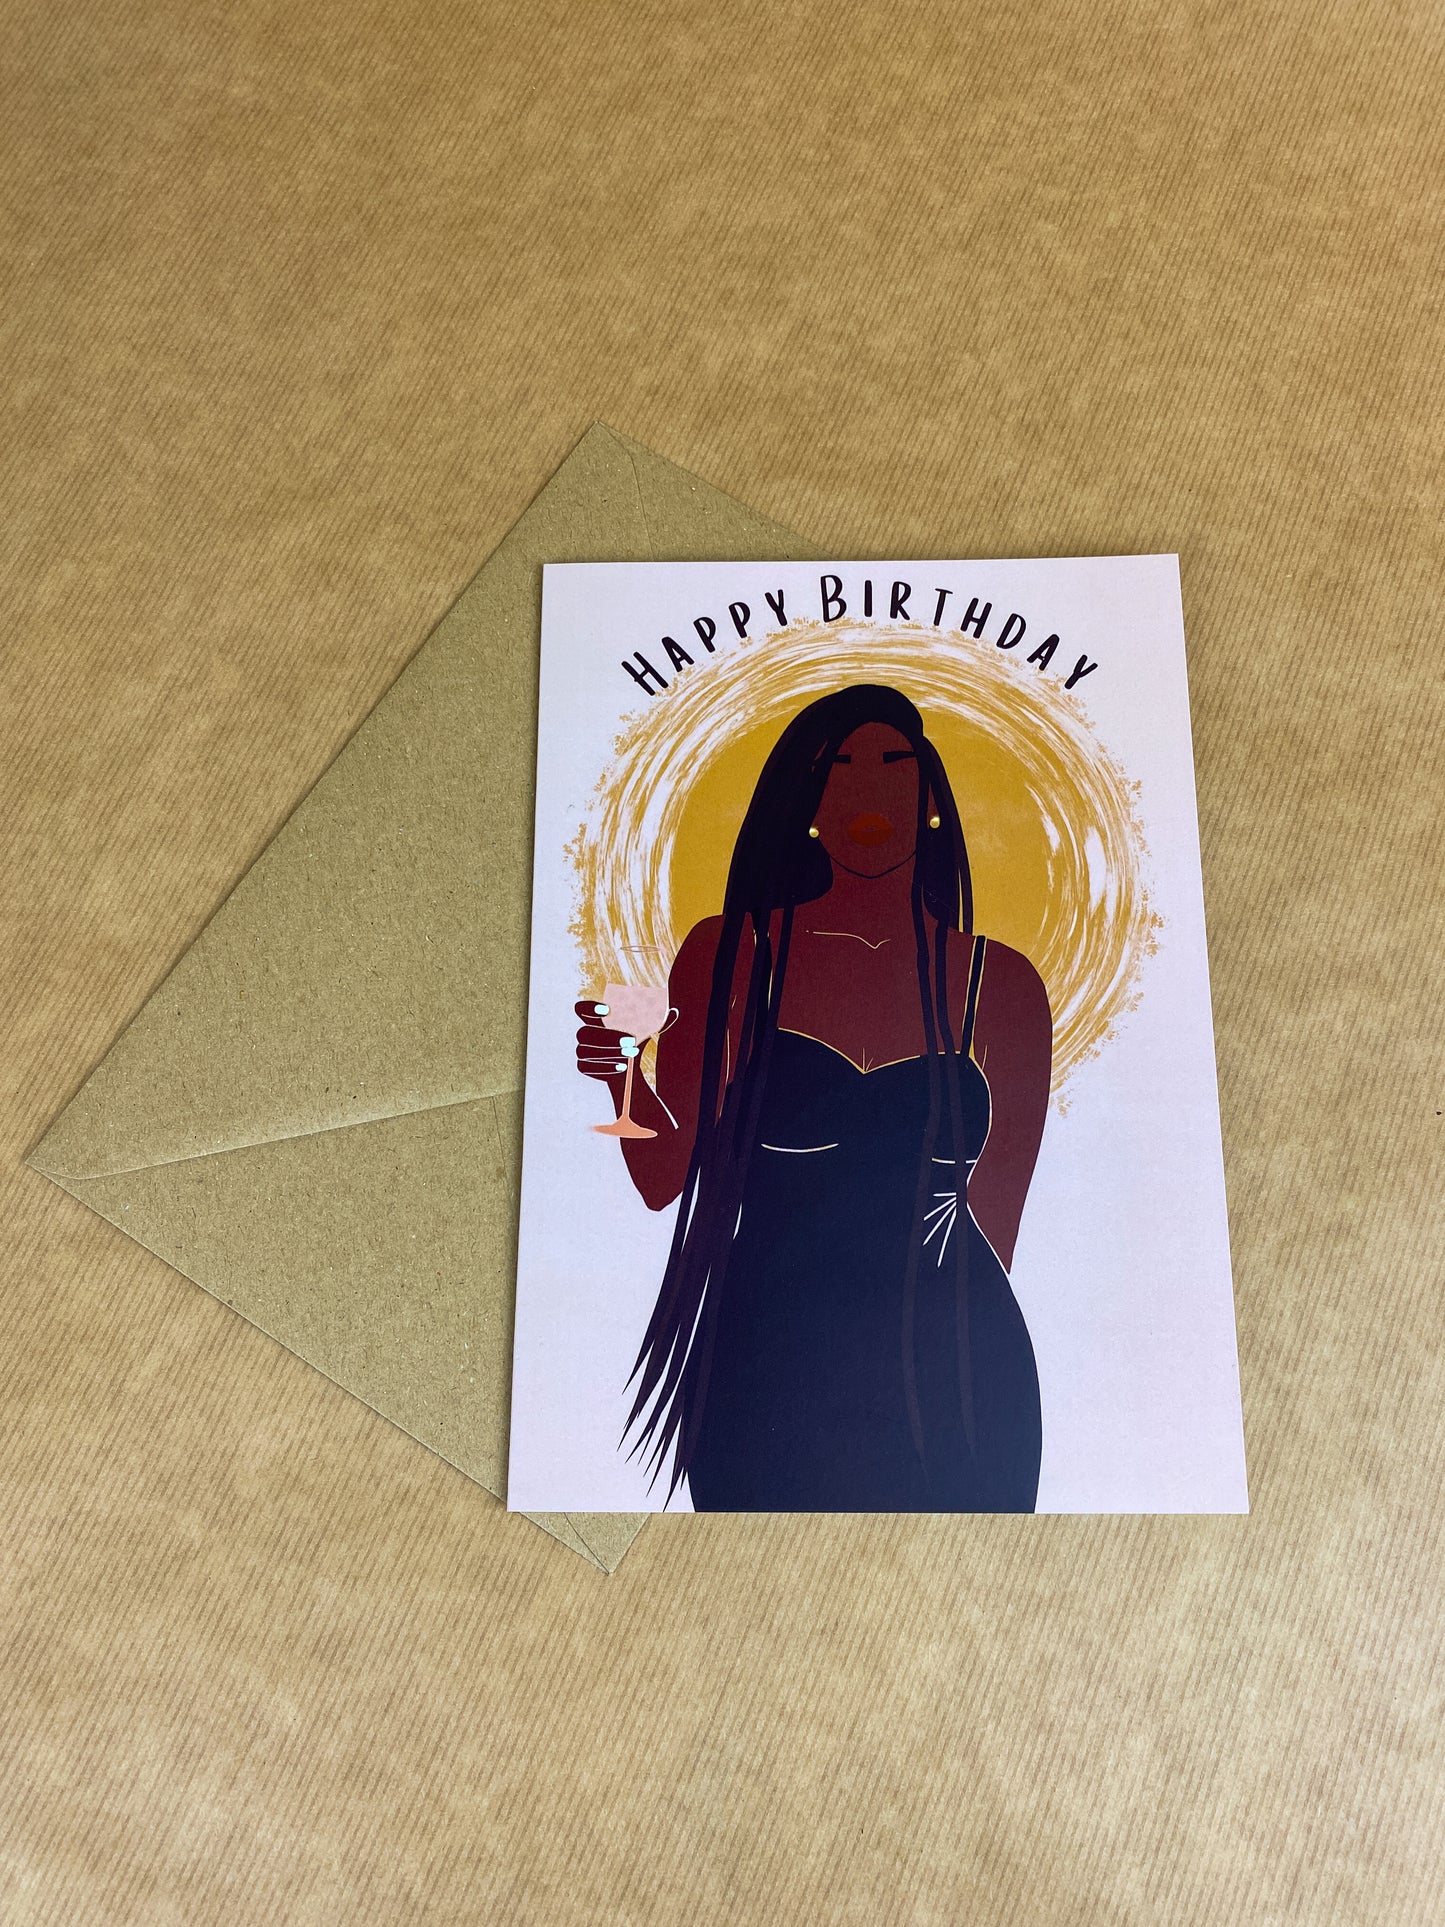 Grace's Birthday Braids - Black Woman Birthday Card